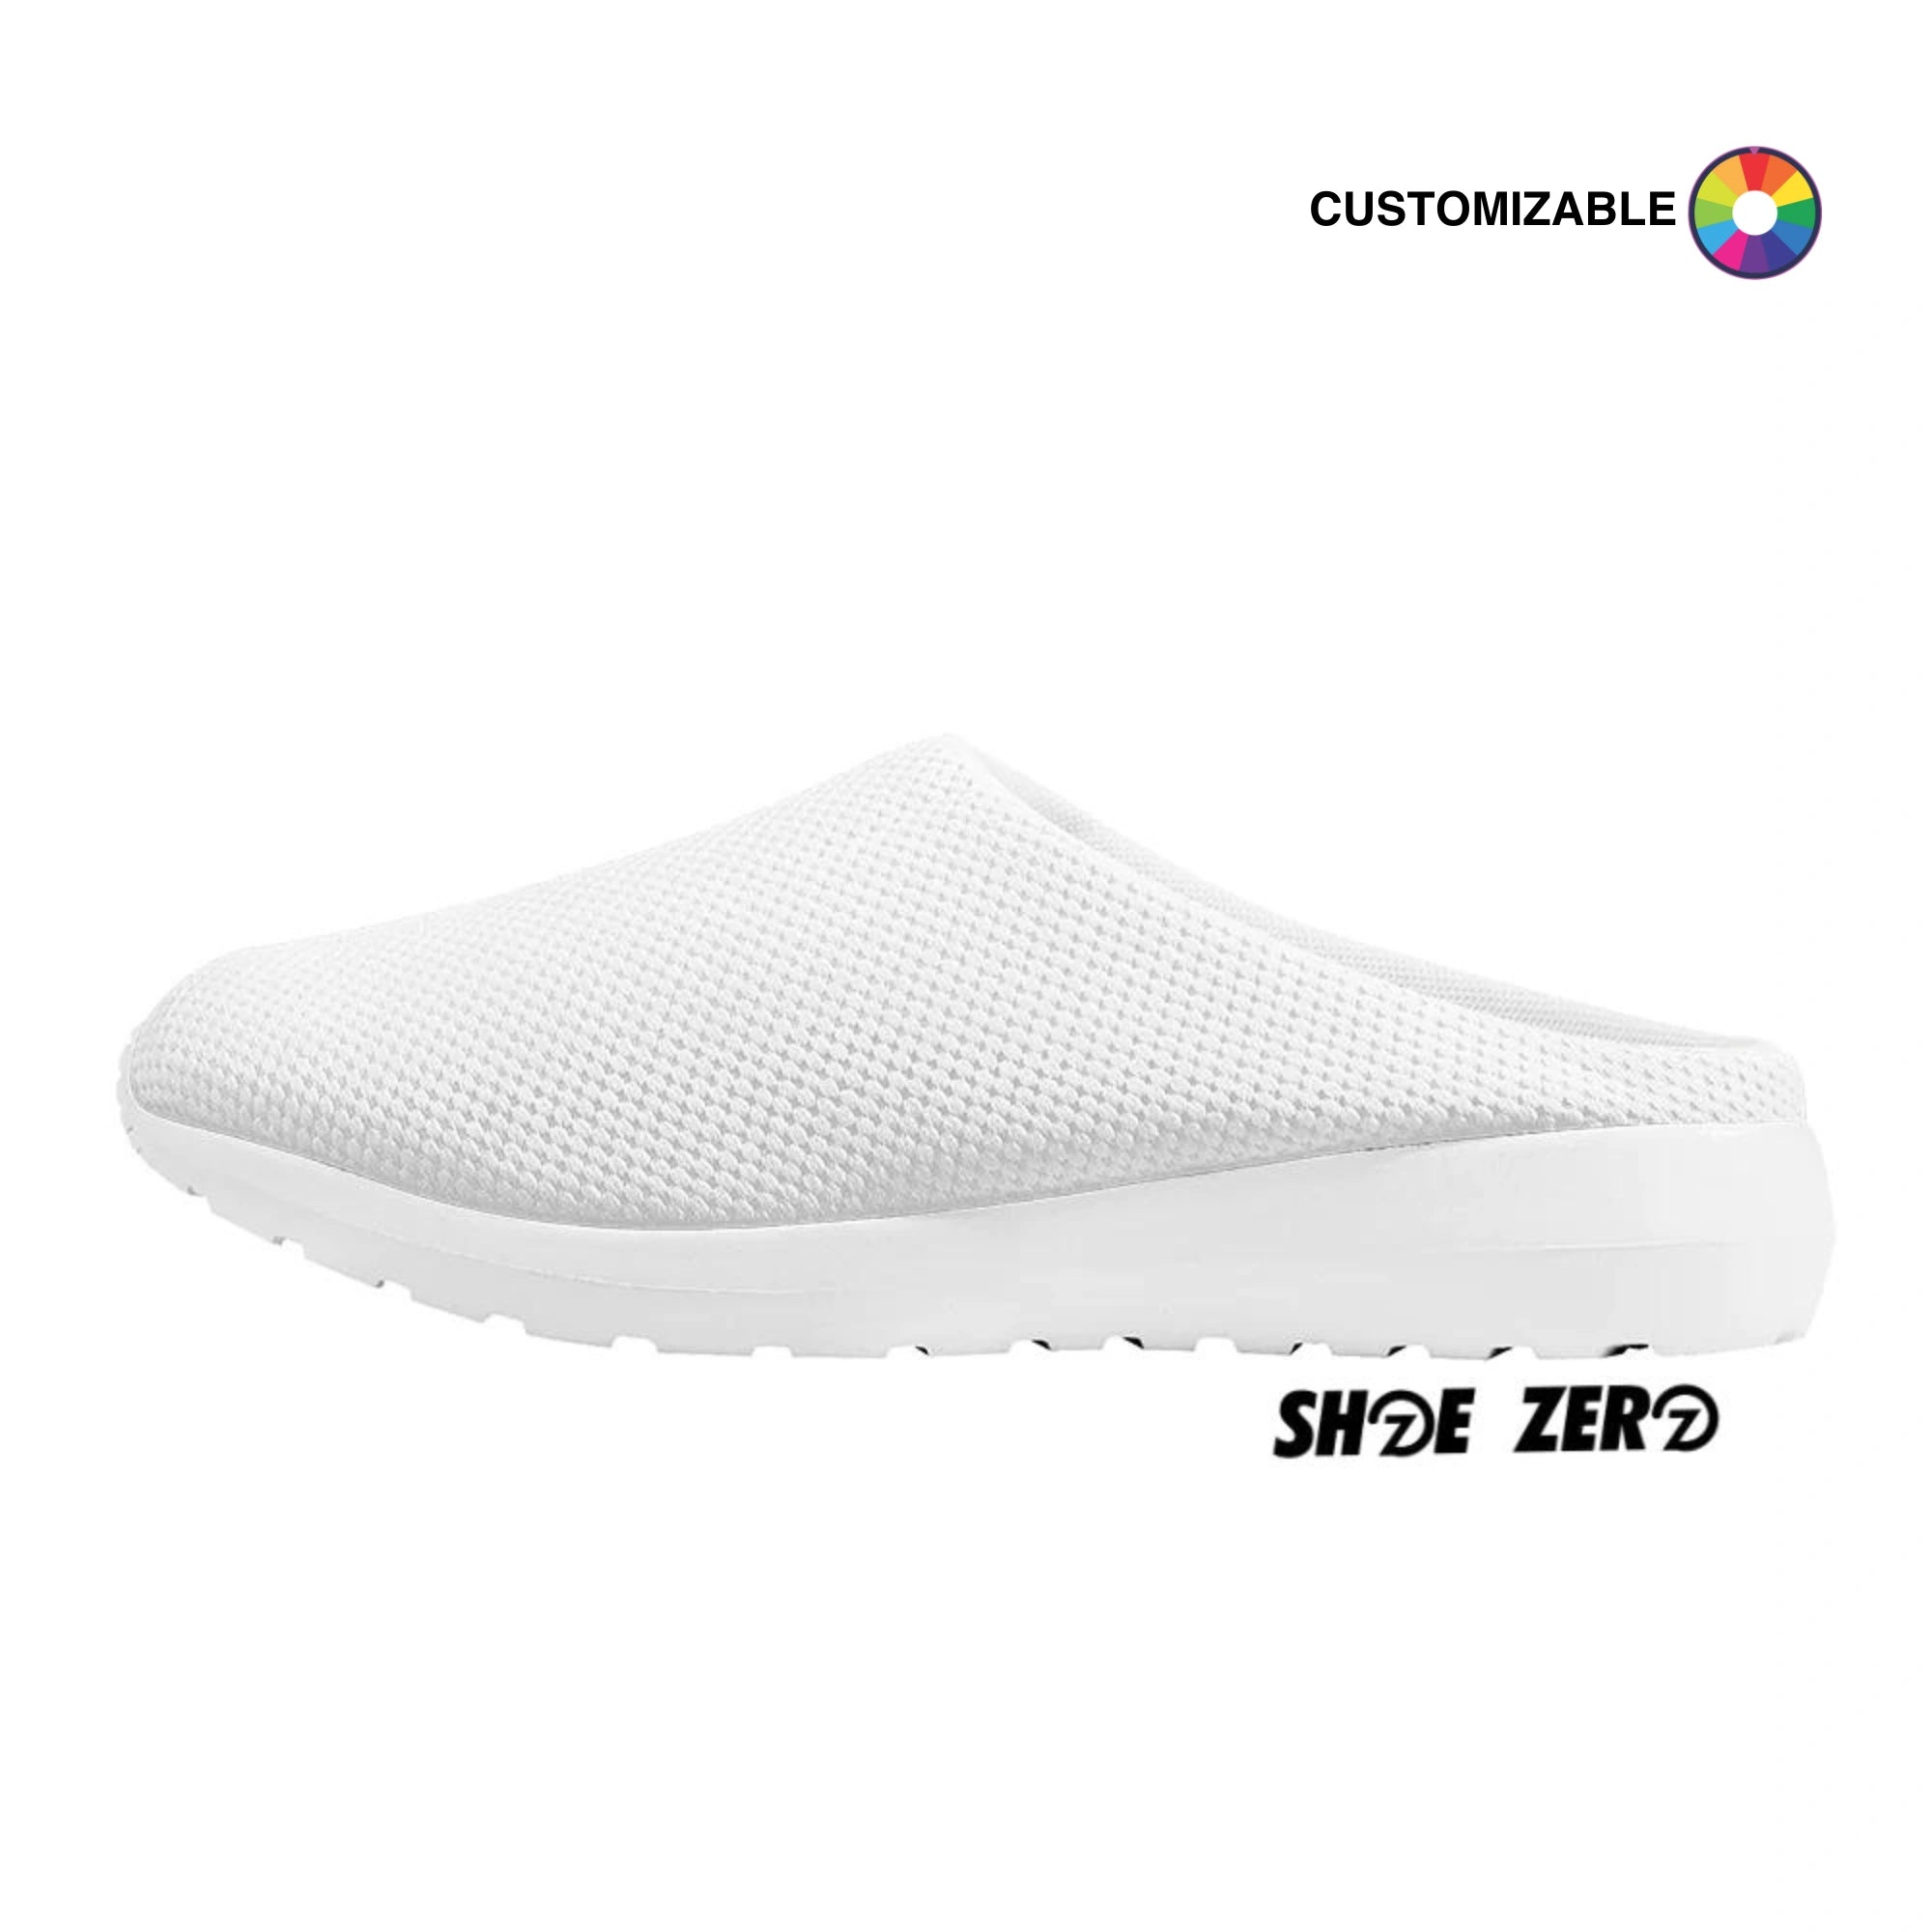 Customizable Mesh Slippers | Design your own | Shoe Zero